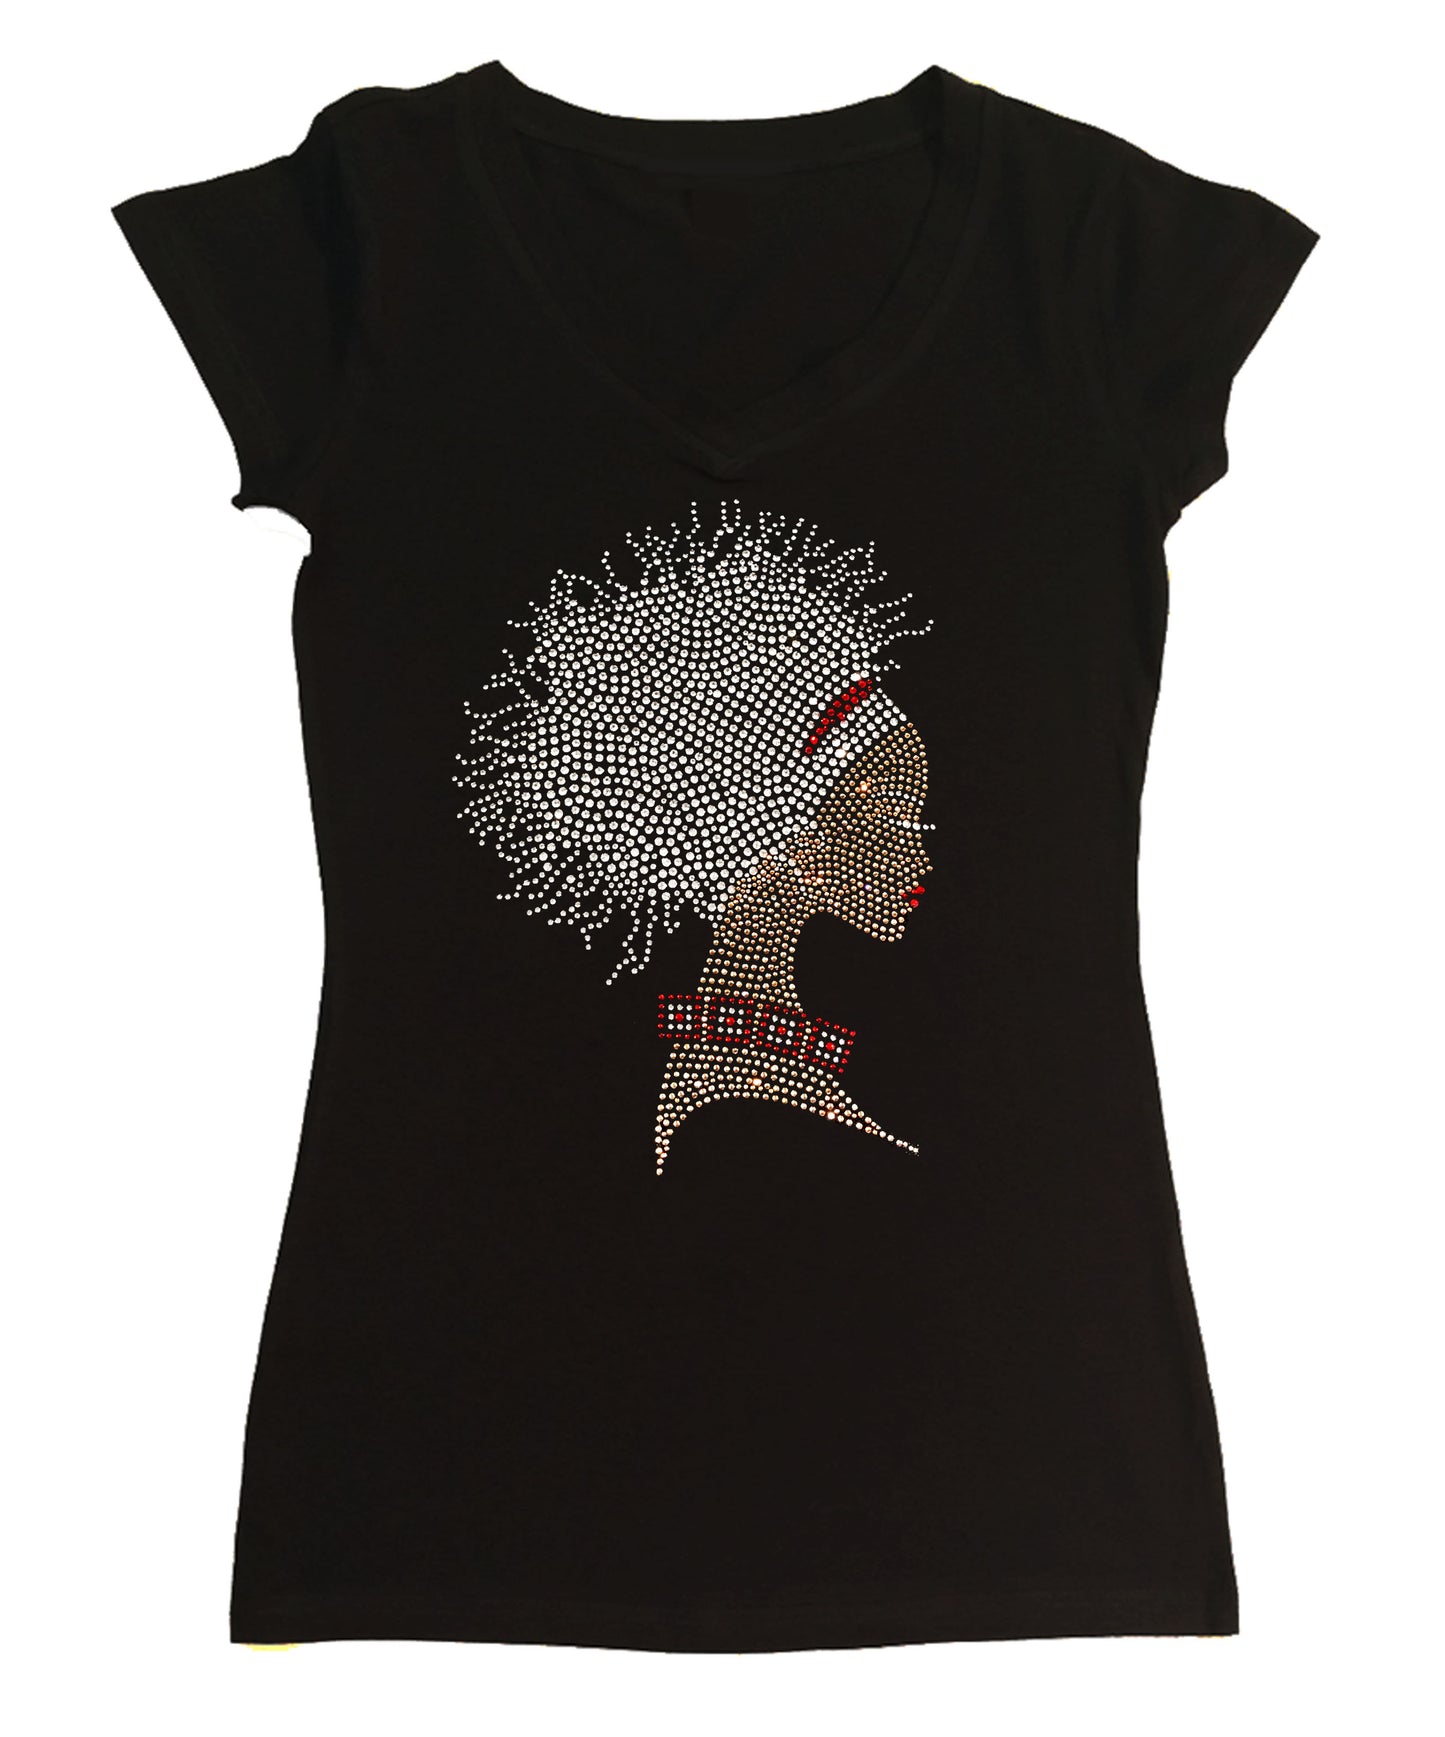 Womens T-shirt with Afro Dreds Locks Girl in Rhinestones